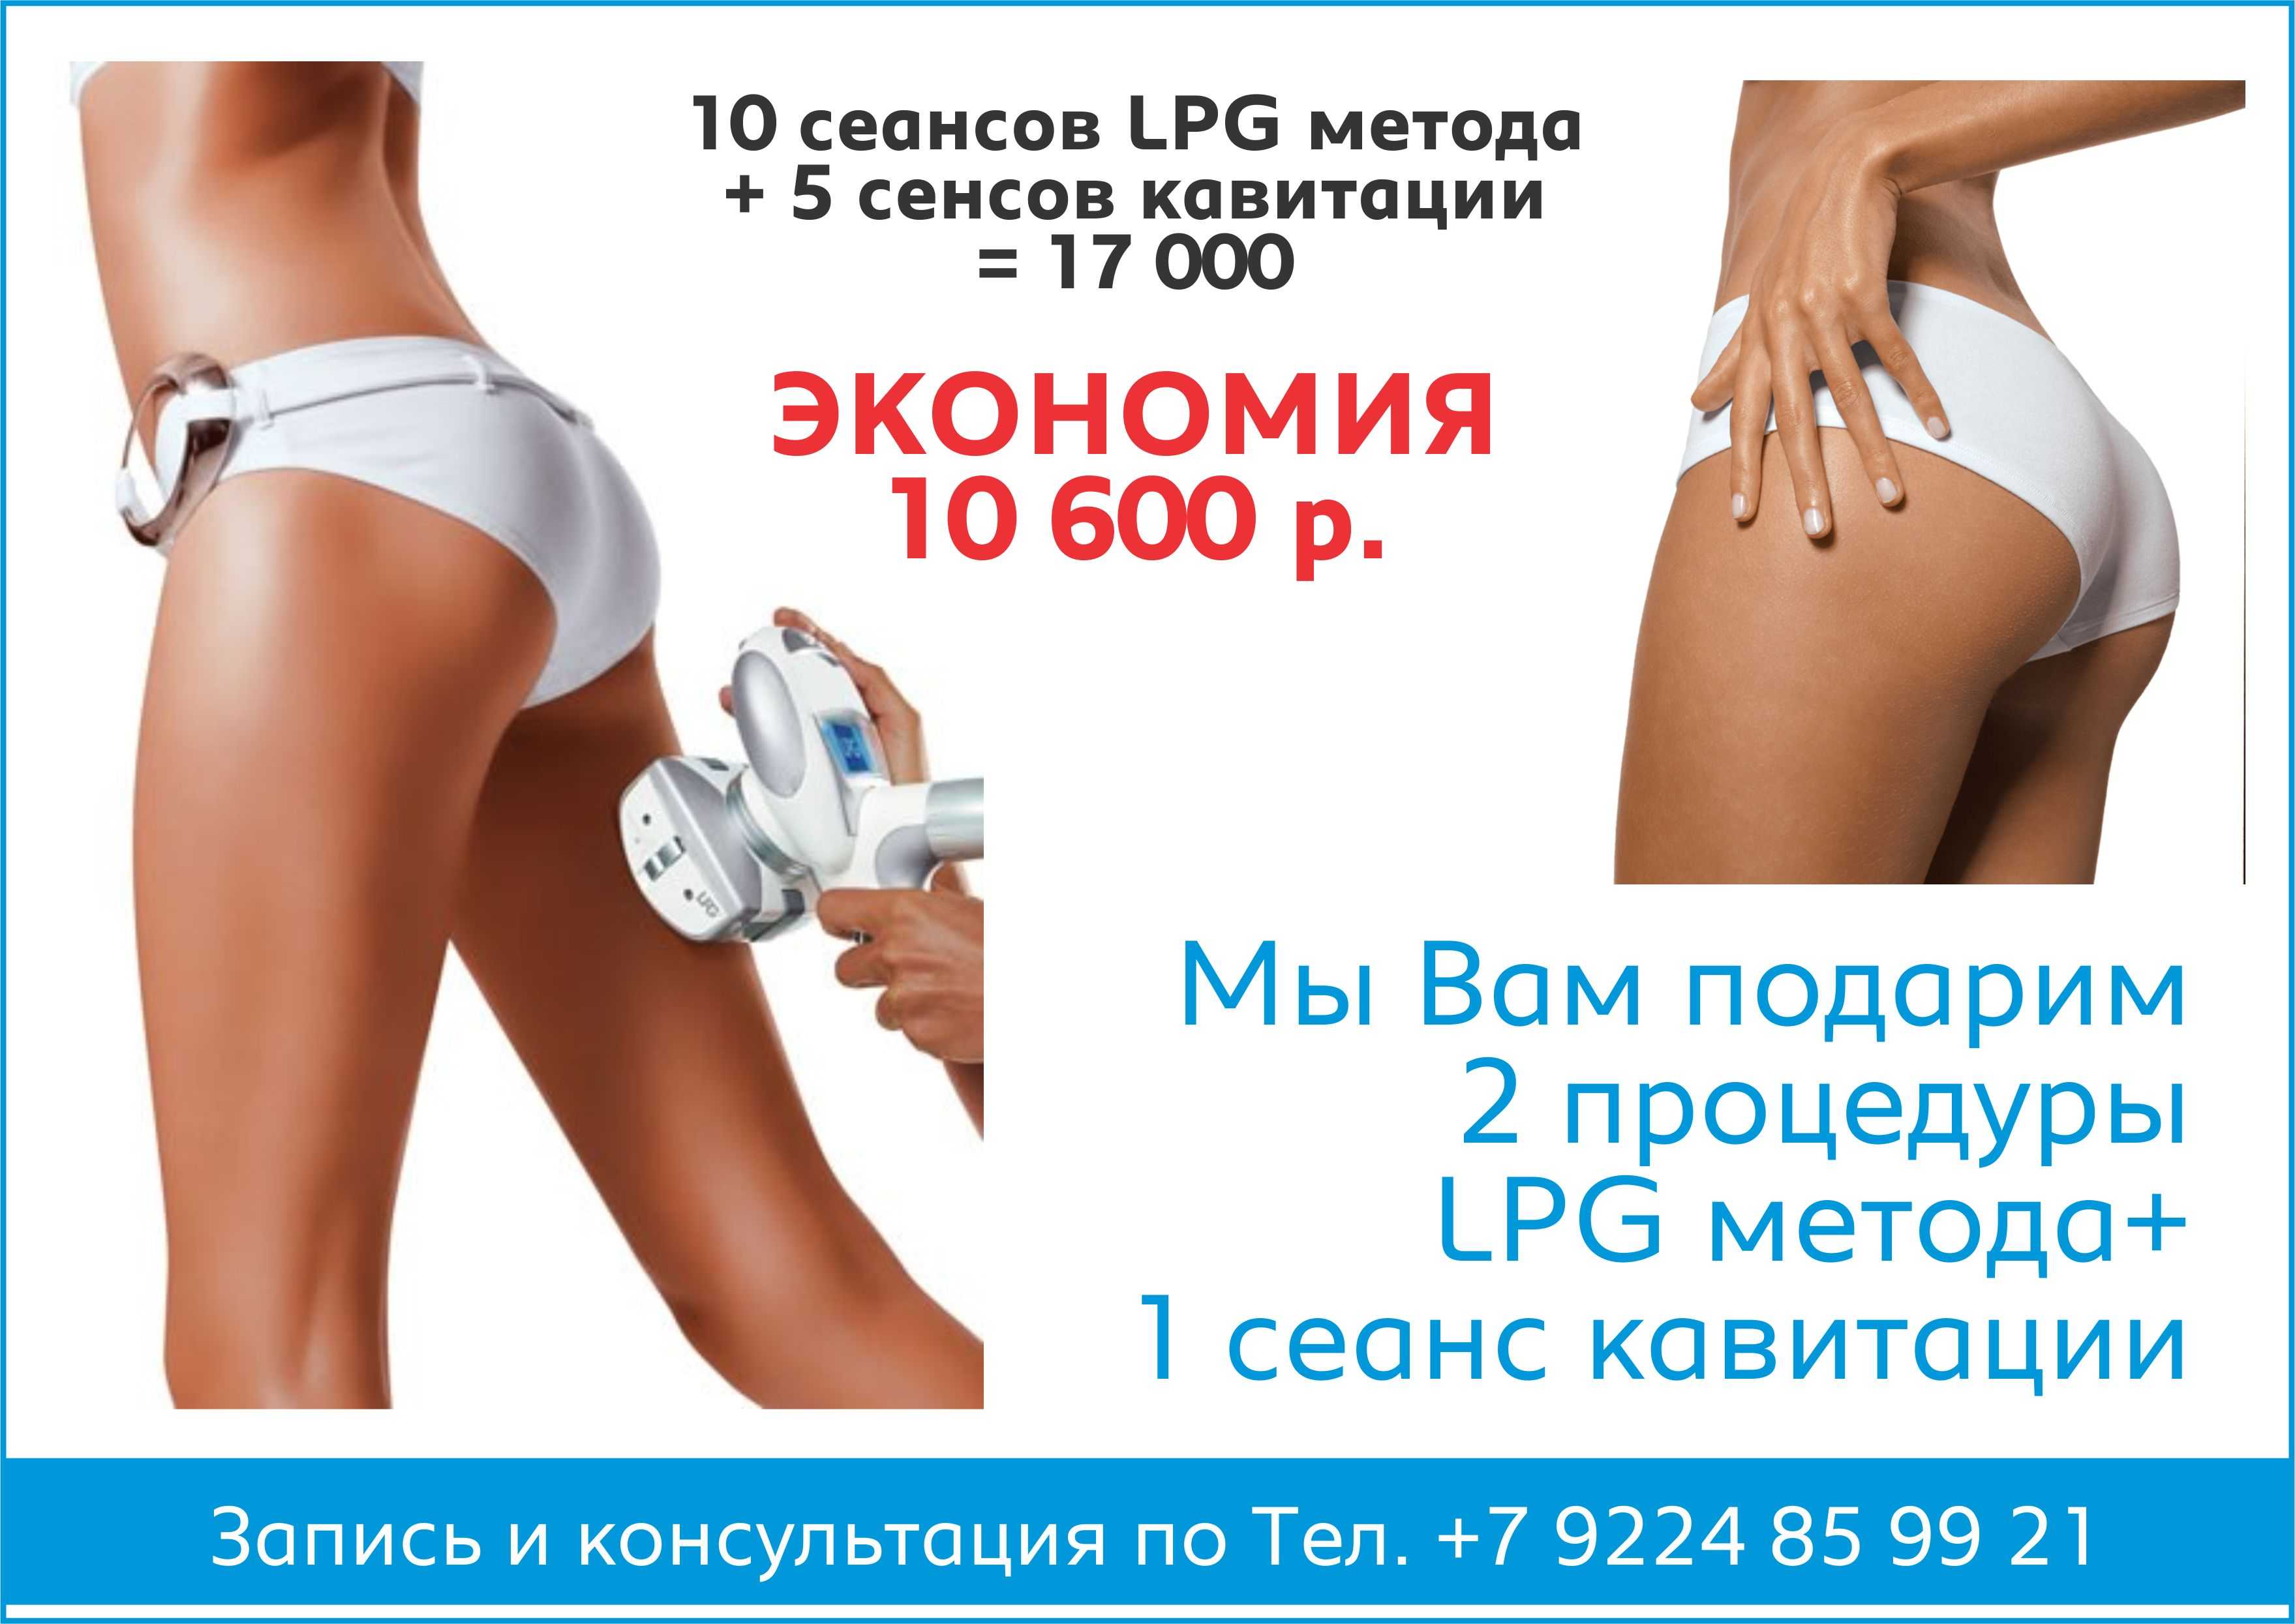 Lpg массаж минусы. Вакуумный массаж лпж. Ролико-вакуумный массаж LPG. Аппаратный массаж для похудения LPG. LPG массаж акция.